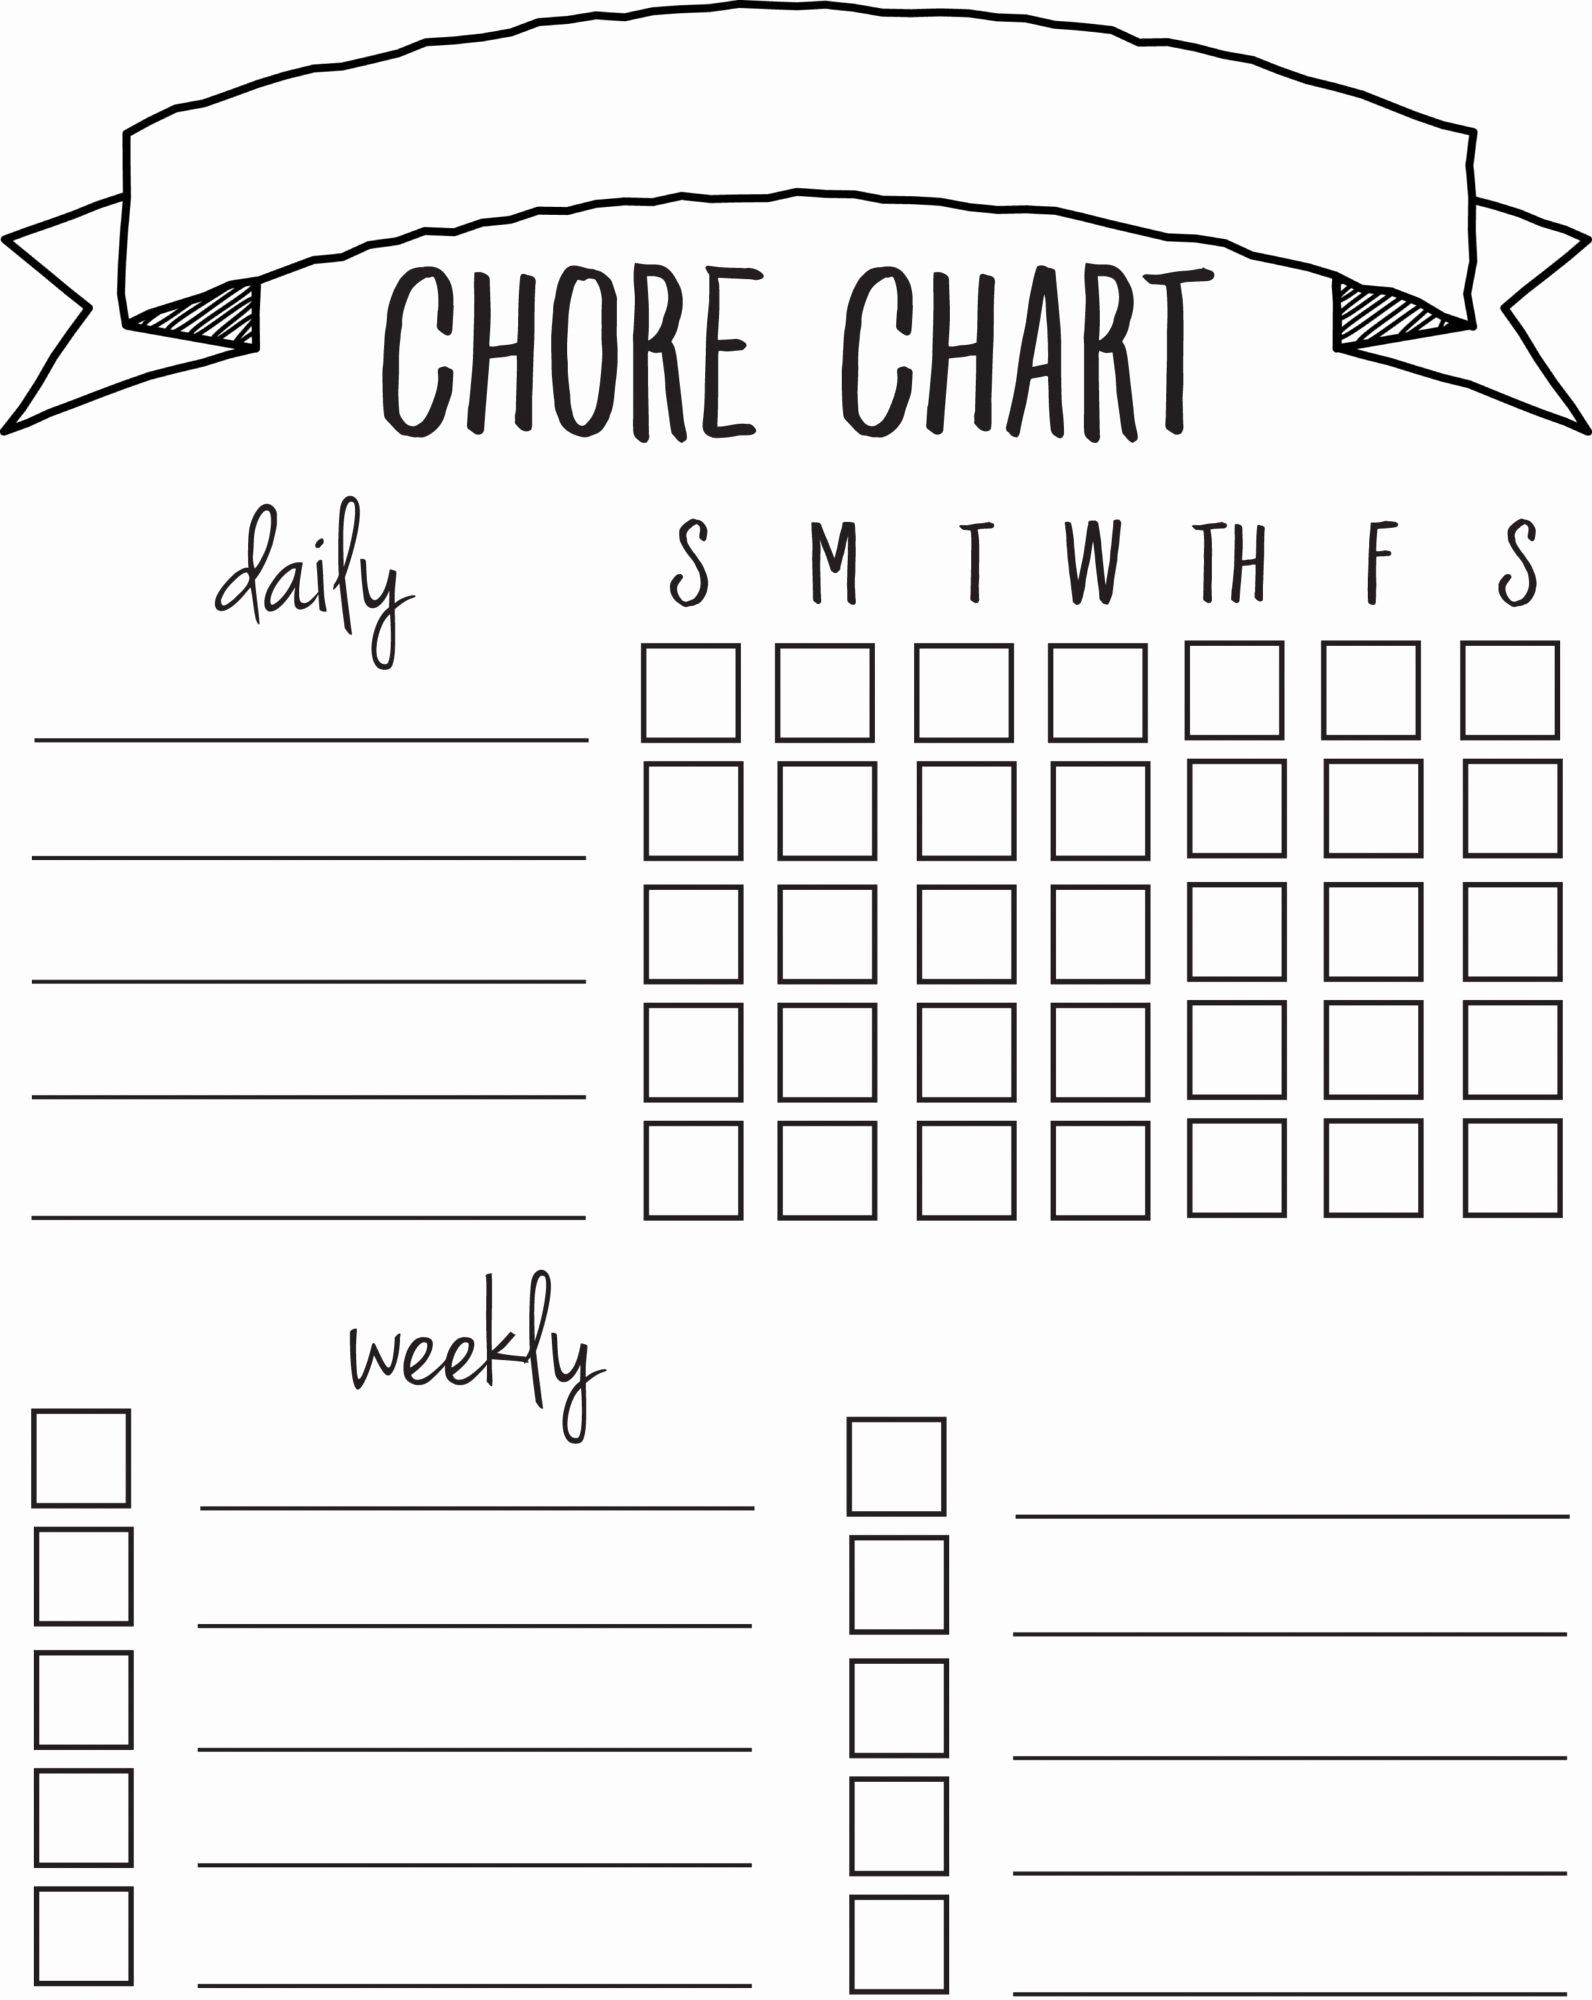 Free Chore Chart Printable New Diy Printable Chore Chart sincerely Sara D